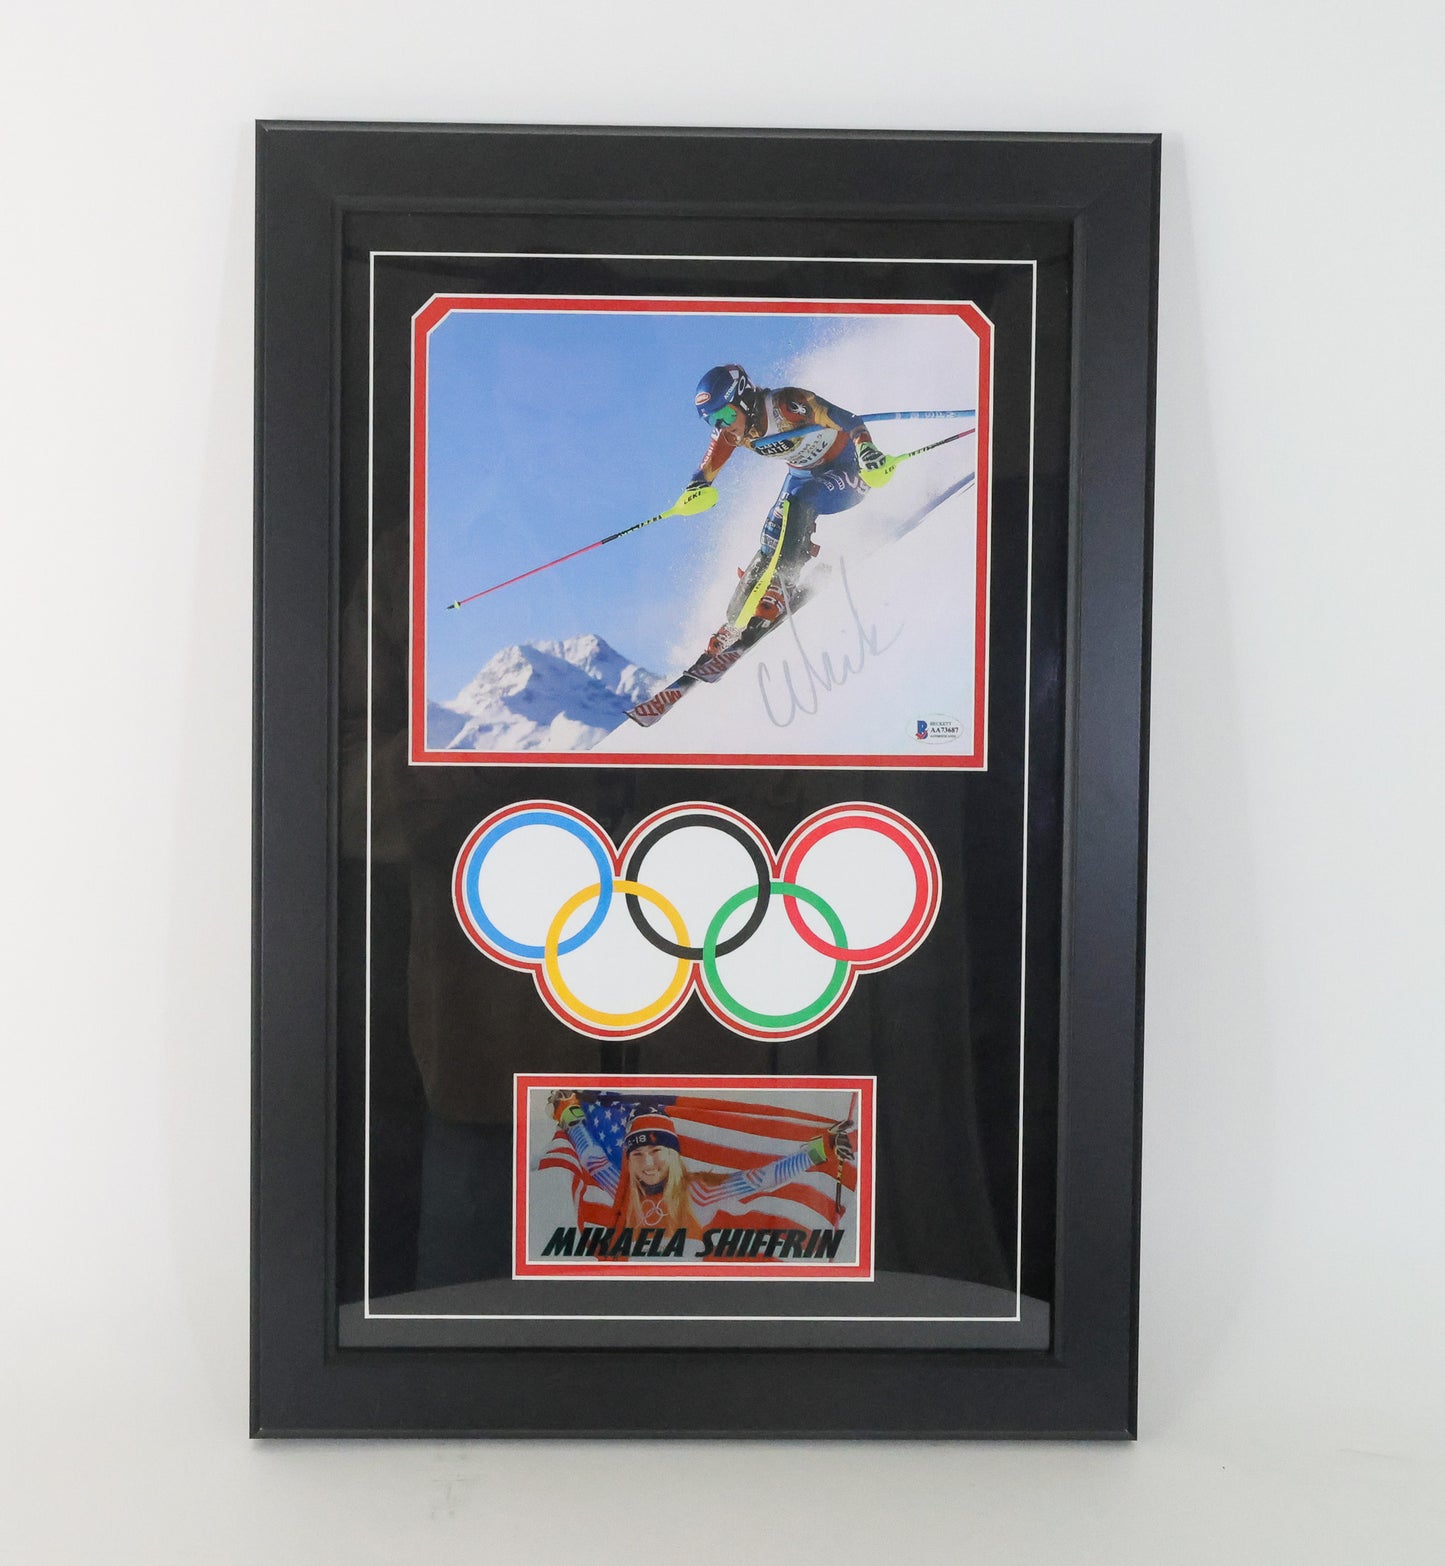 Makaela Shiffrin Autographed Olympics 8X10 Frame